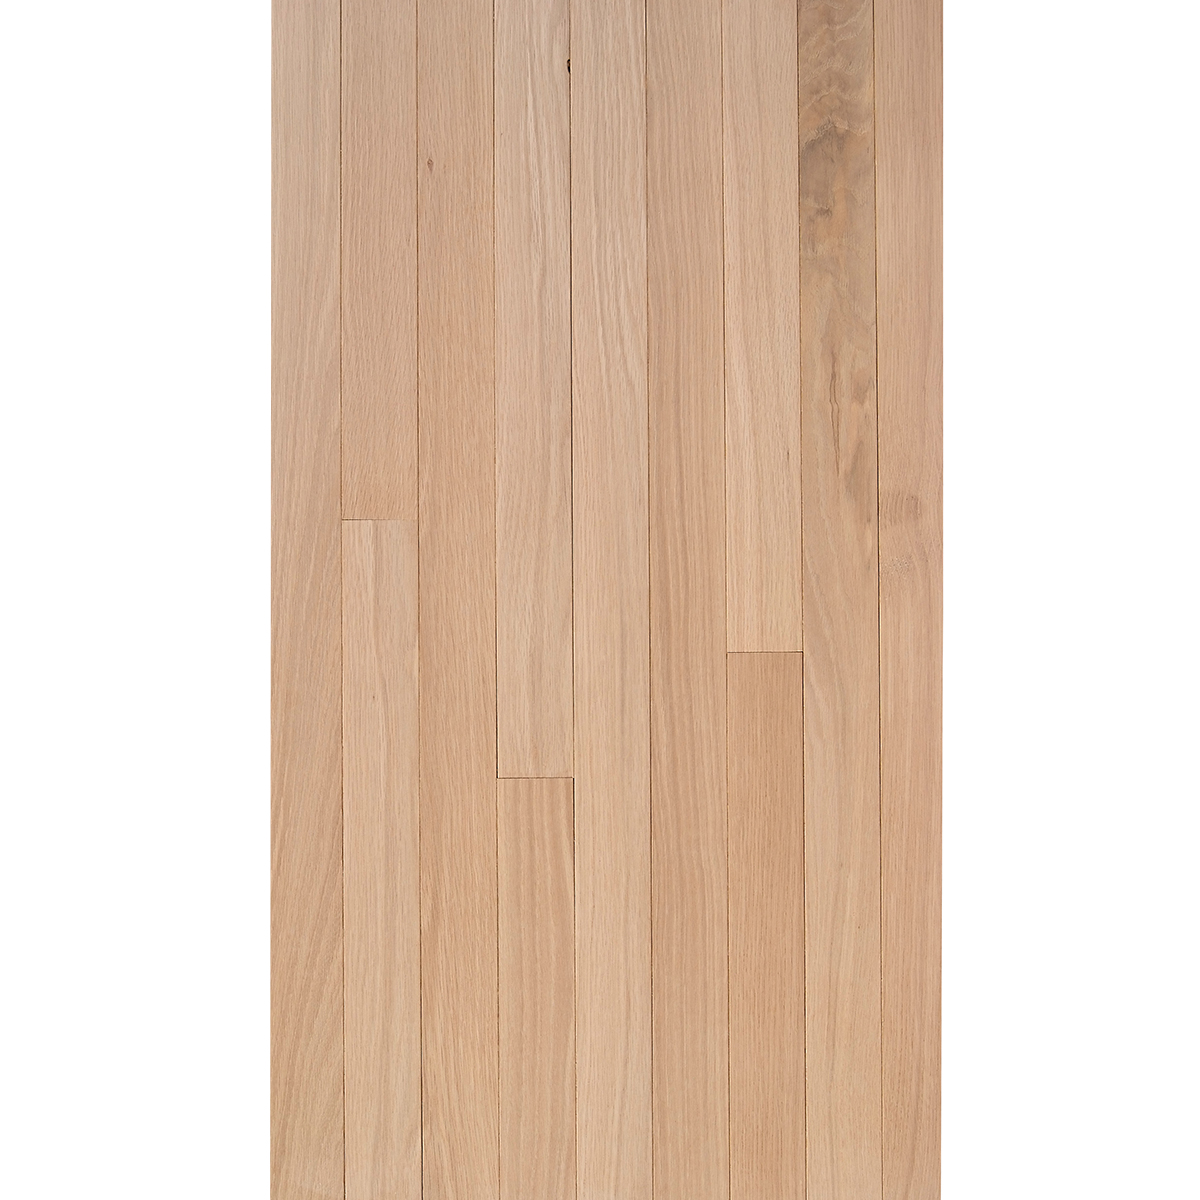 White Oak 3 4 X 2 1 Select Grade, 2 1 4 Inch Oak Hardwood Flooring